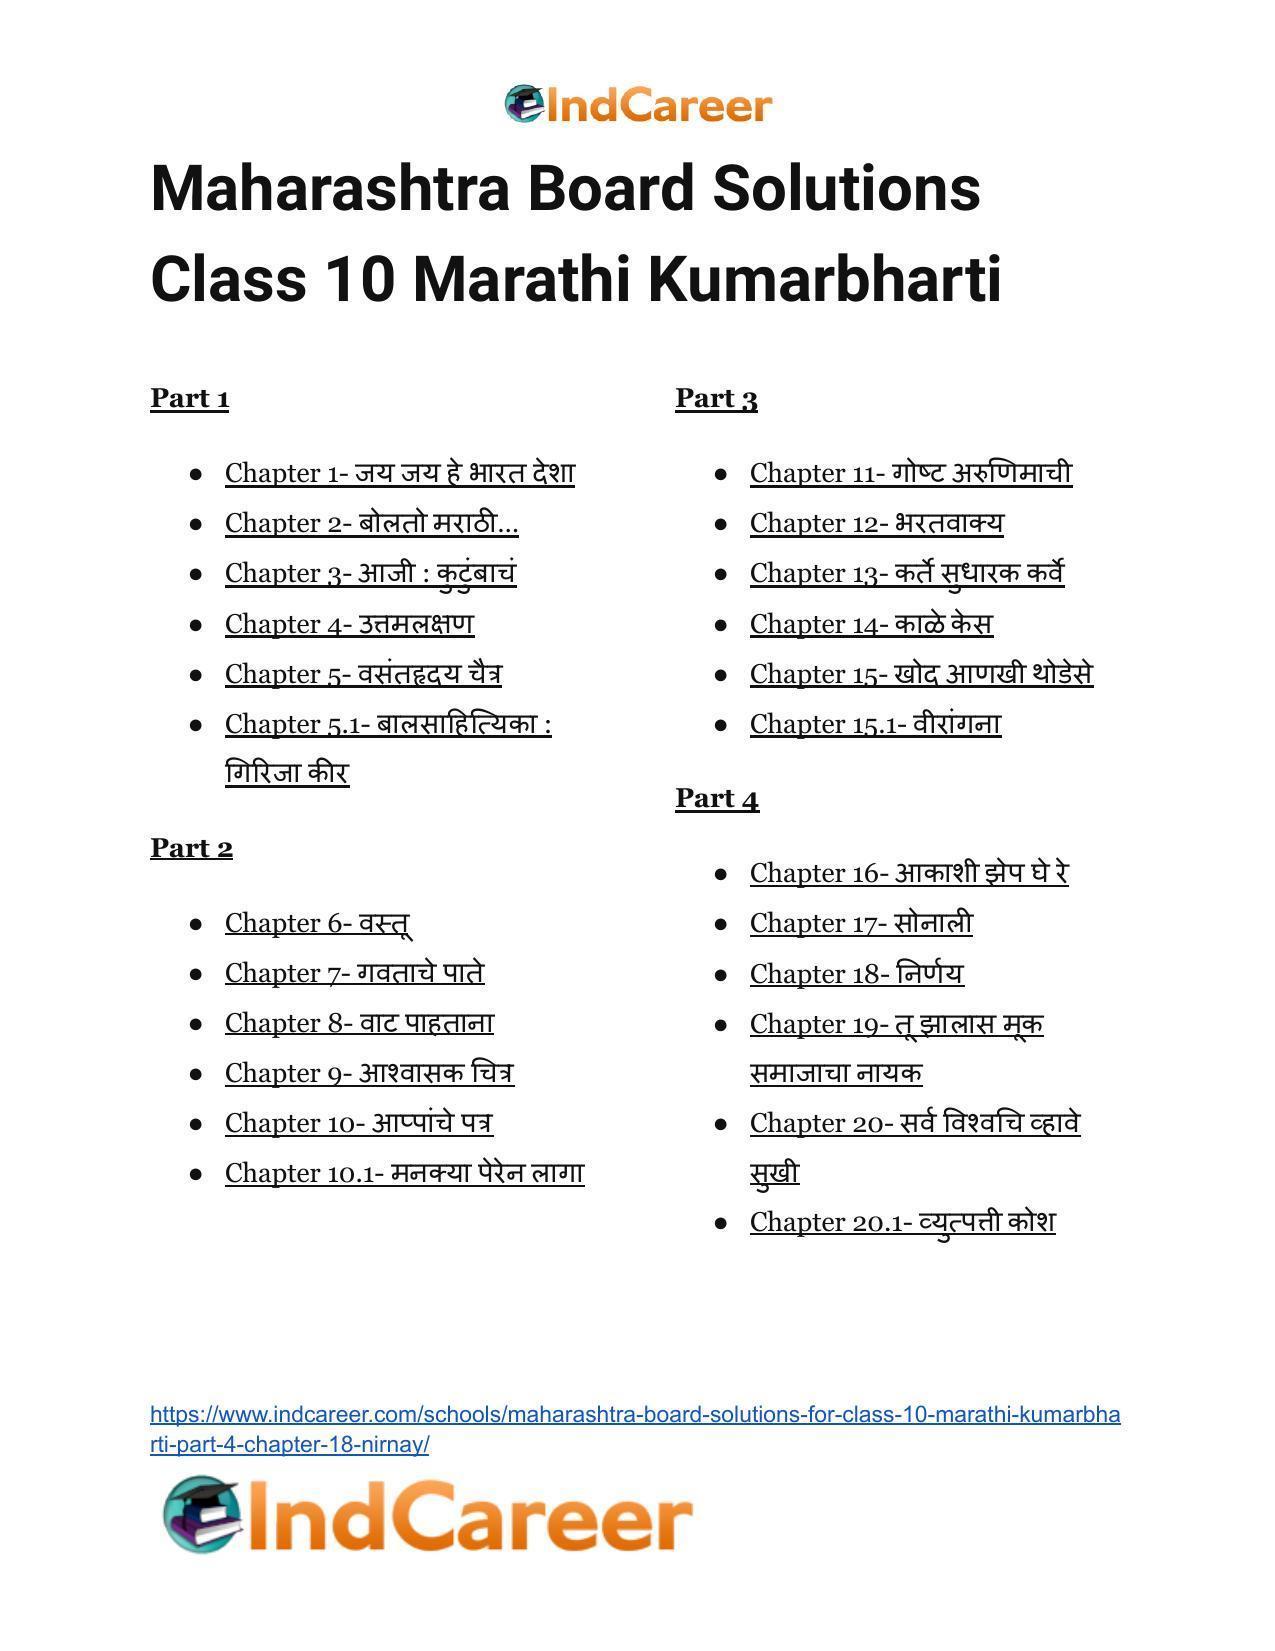 Maharashtra Board Solutions for Class 10- Marathi Kumarbharti (Part- 4): Chapter 18- निर्णय - Page 33